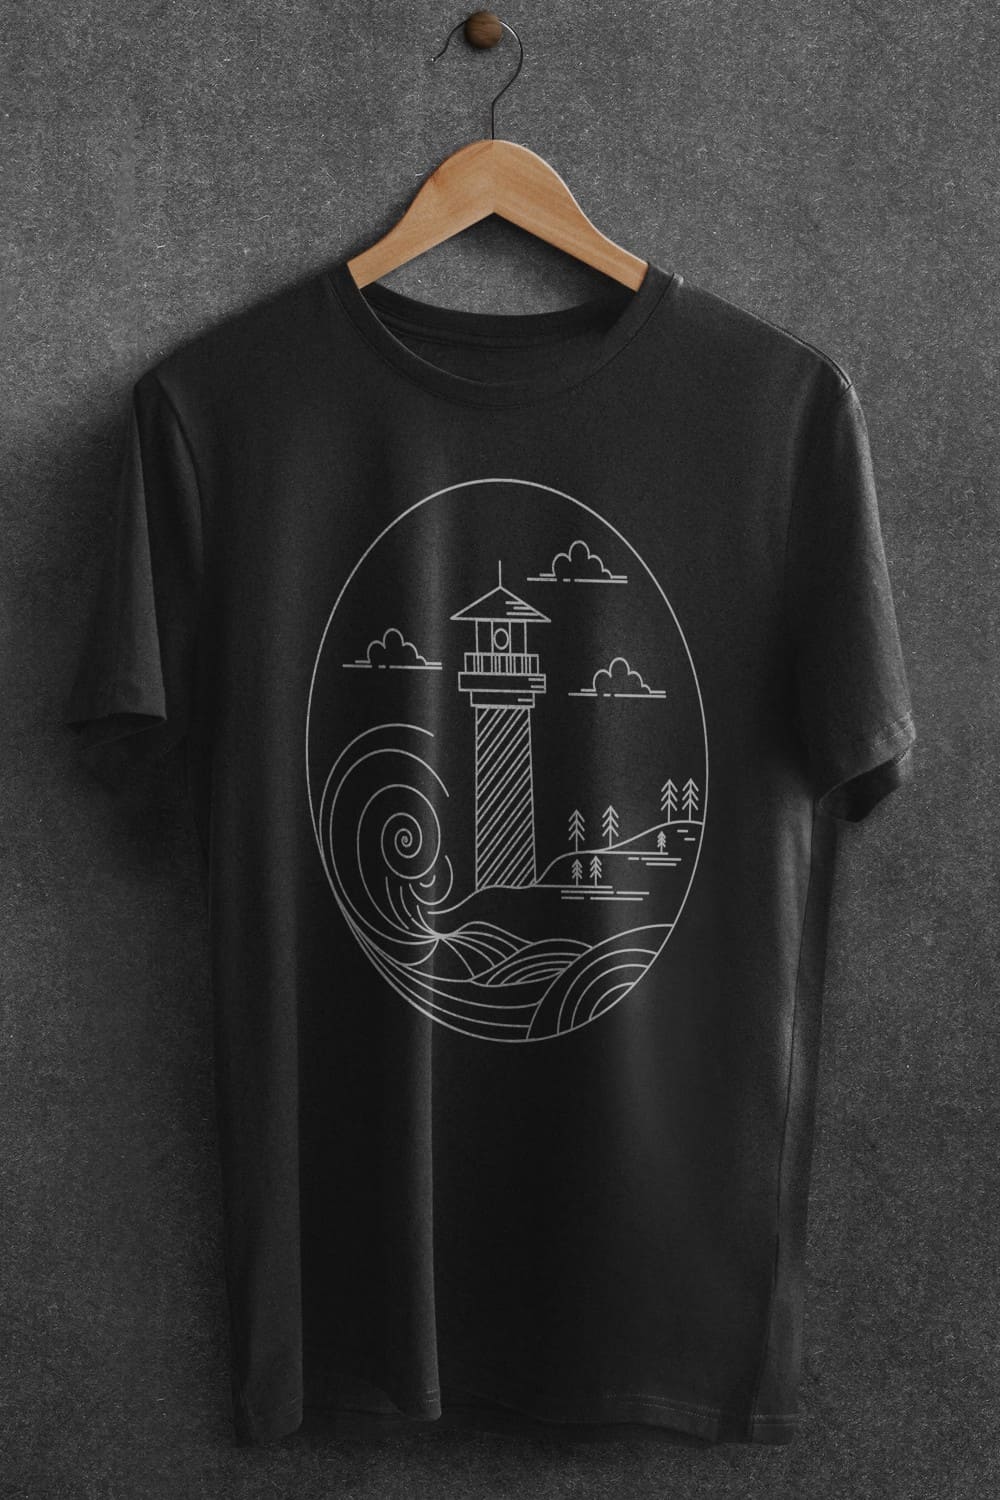 Lighthouse Line Art Style T-shirt Design pinterest image preview.